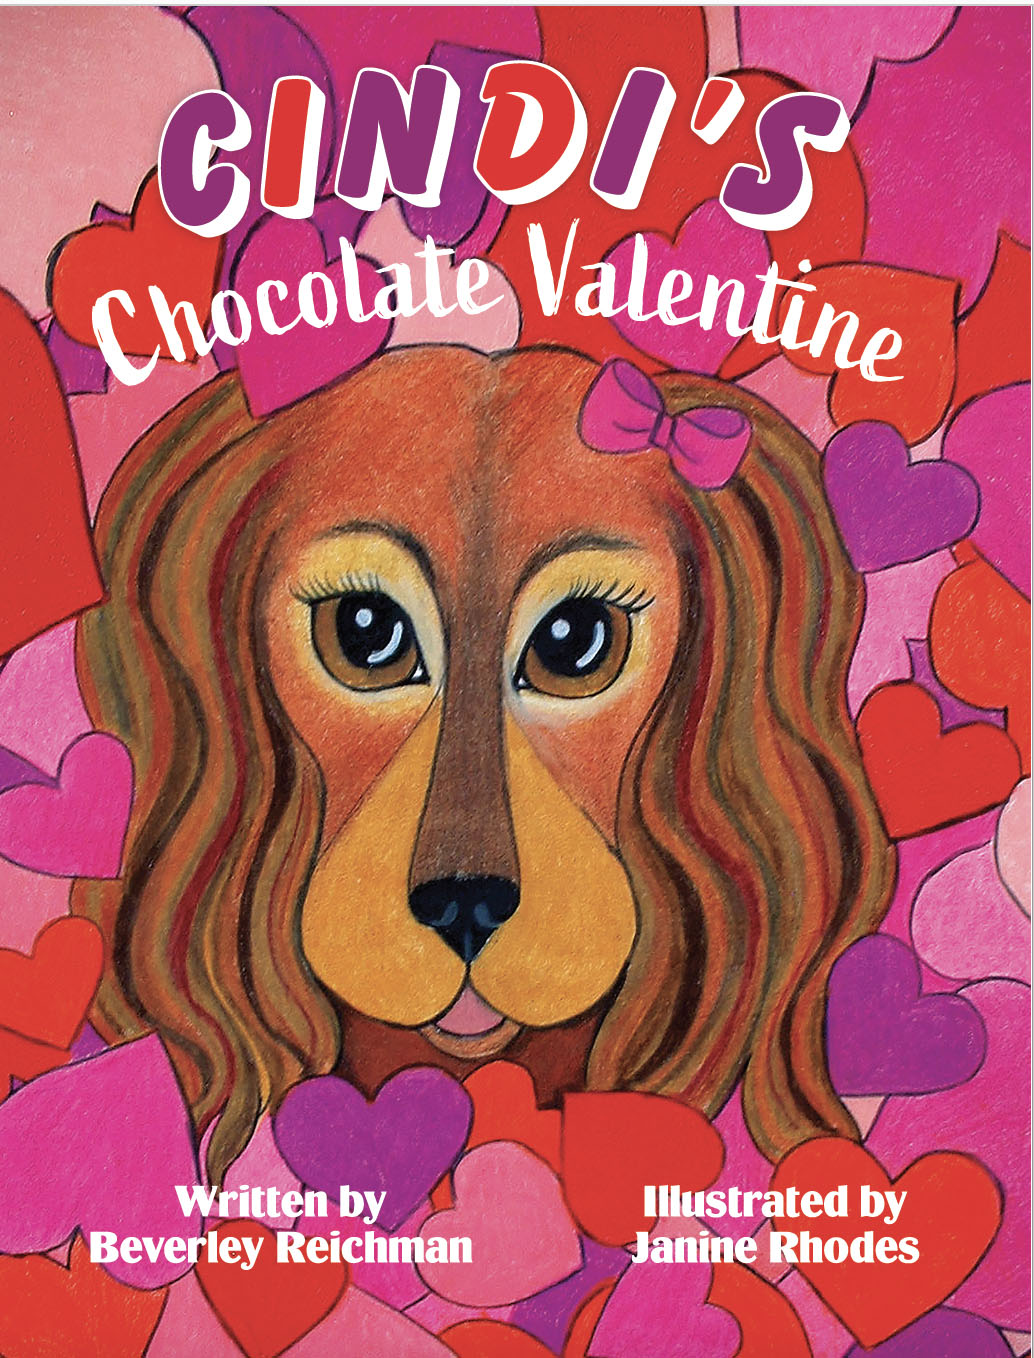 CINDI'S CHOCOLATE VALENTINE by Beverly Reichman